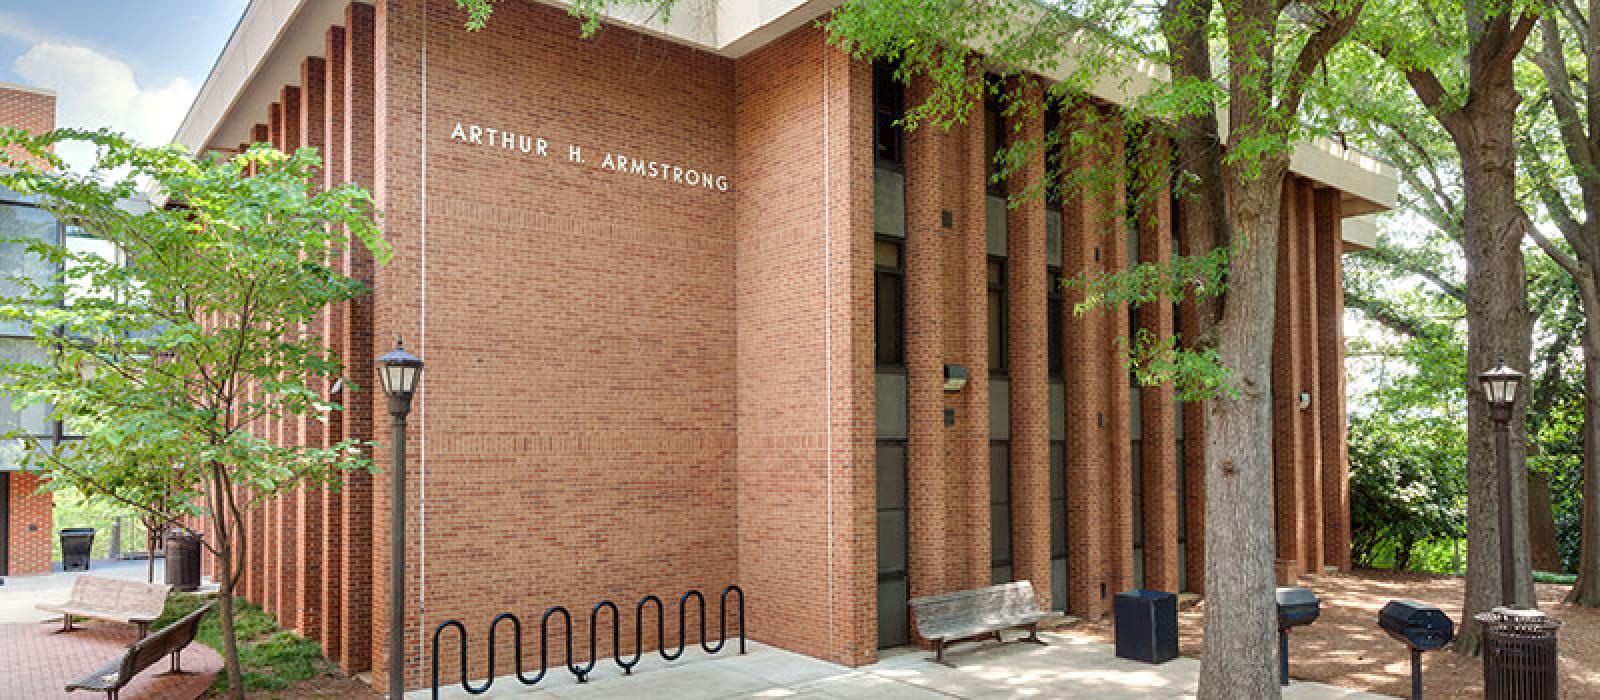 Arthur H. Armstrong building